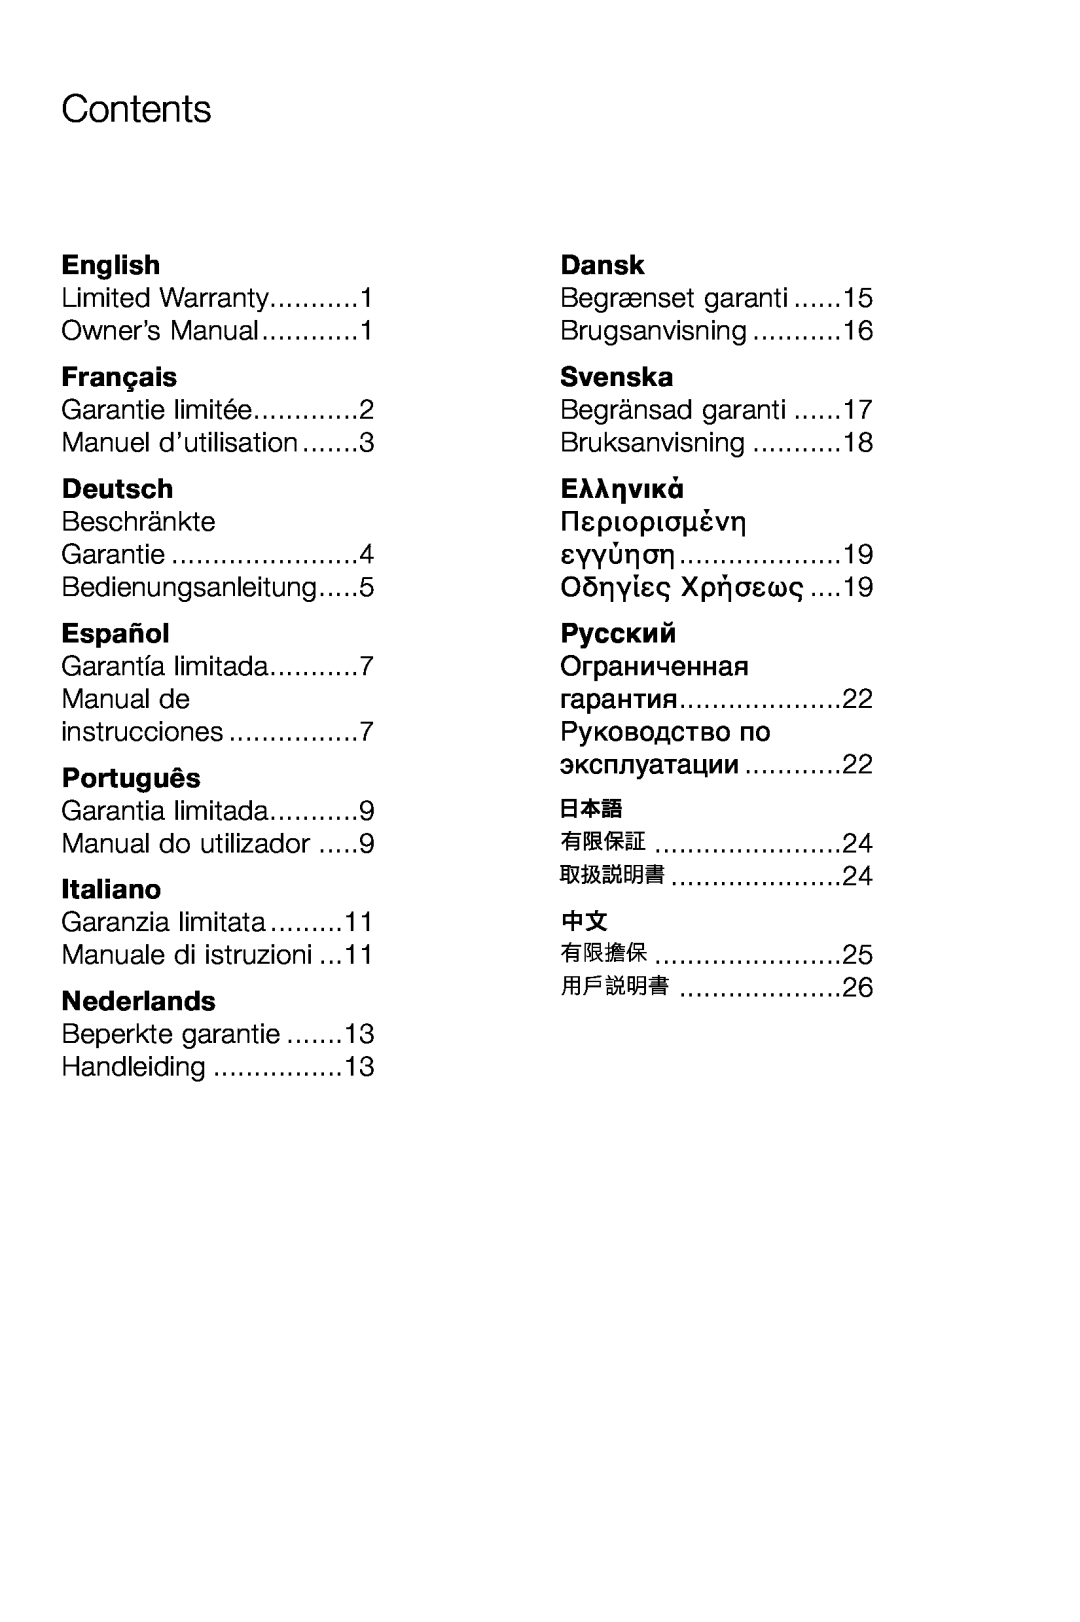 Bowers & Wilkins 803 Contents, English, Dansk, Français, Svenska, Deutsch, Ελληνικά, Español, Русский, Português, Italiano 